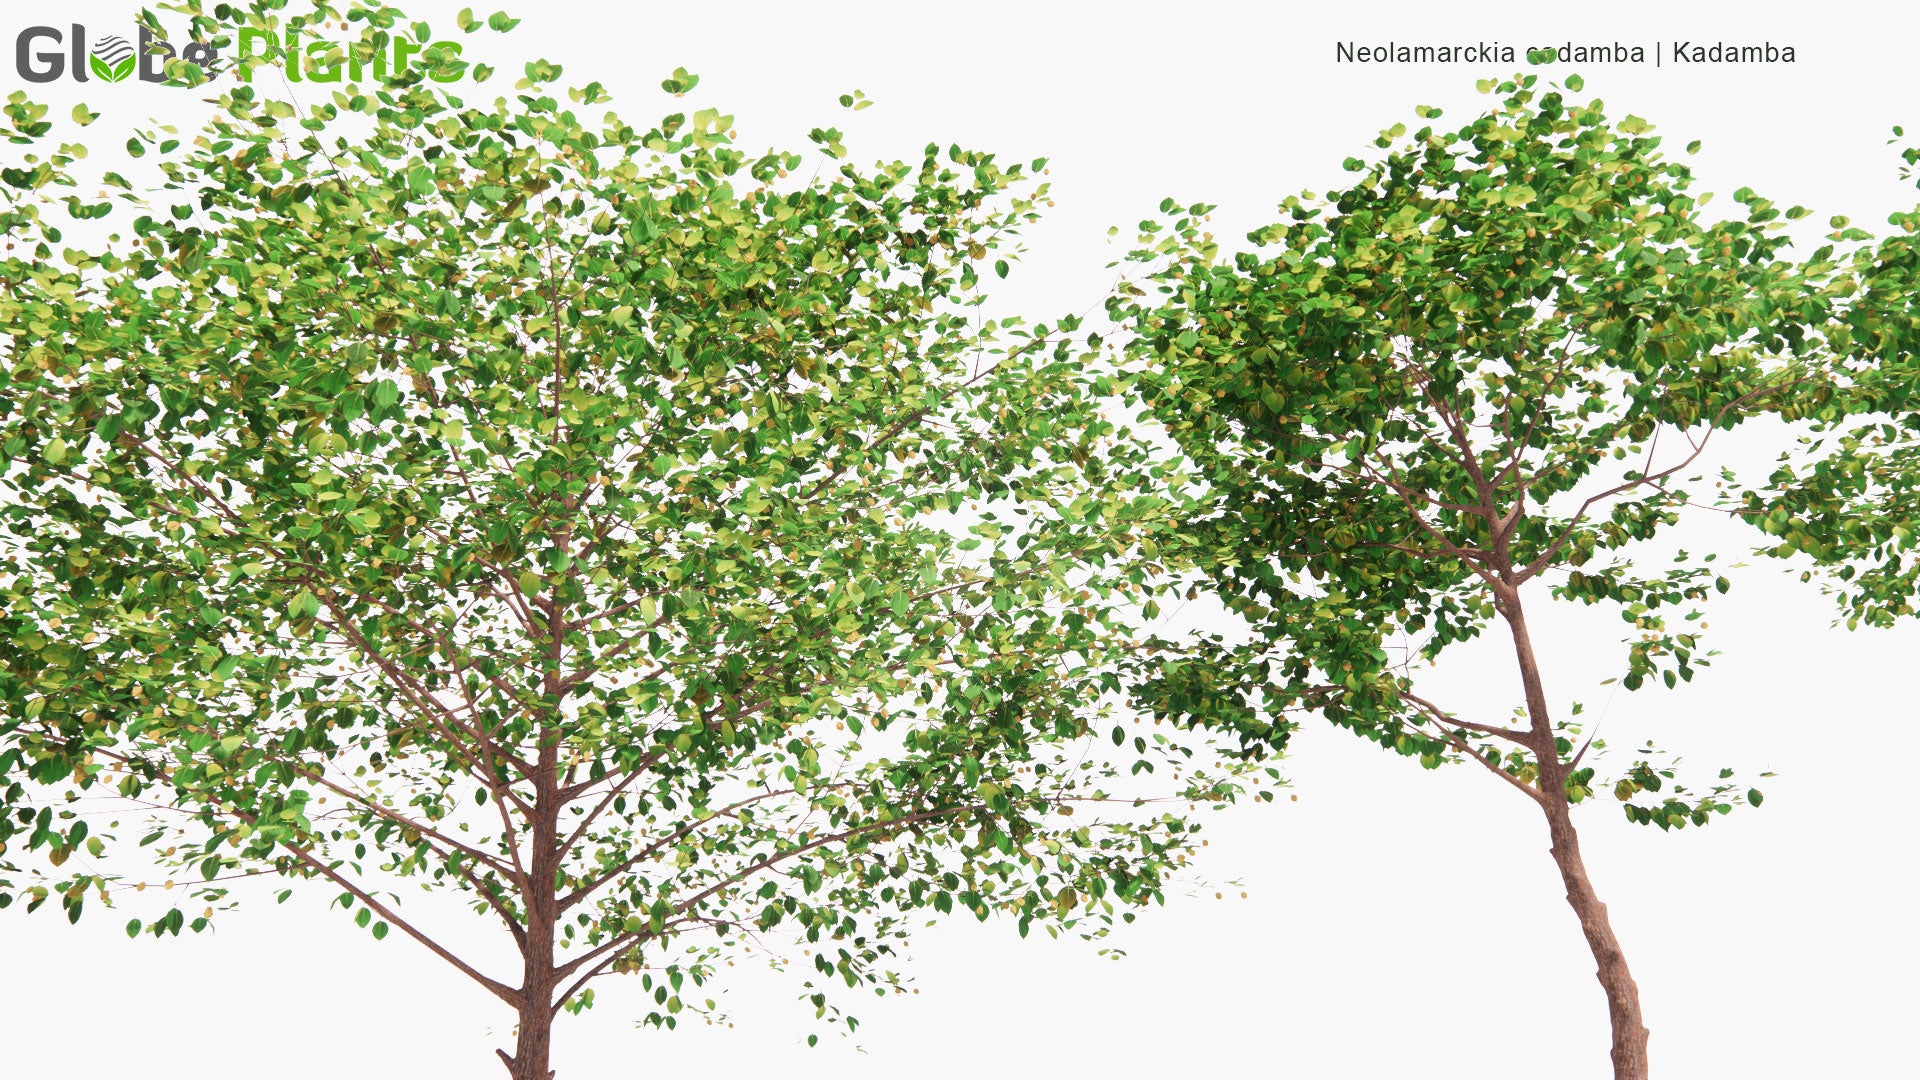 Low Poly Neolamarckia Cadamba - Kadamba, Burflower-Tree, Laran, Leichhardt Pine (3D Model)